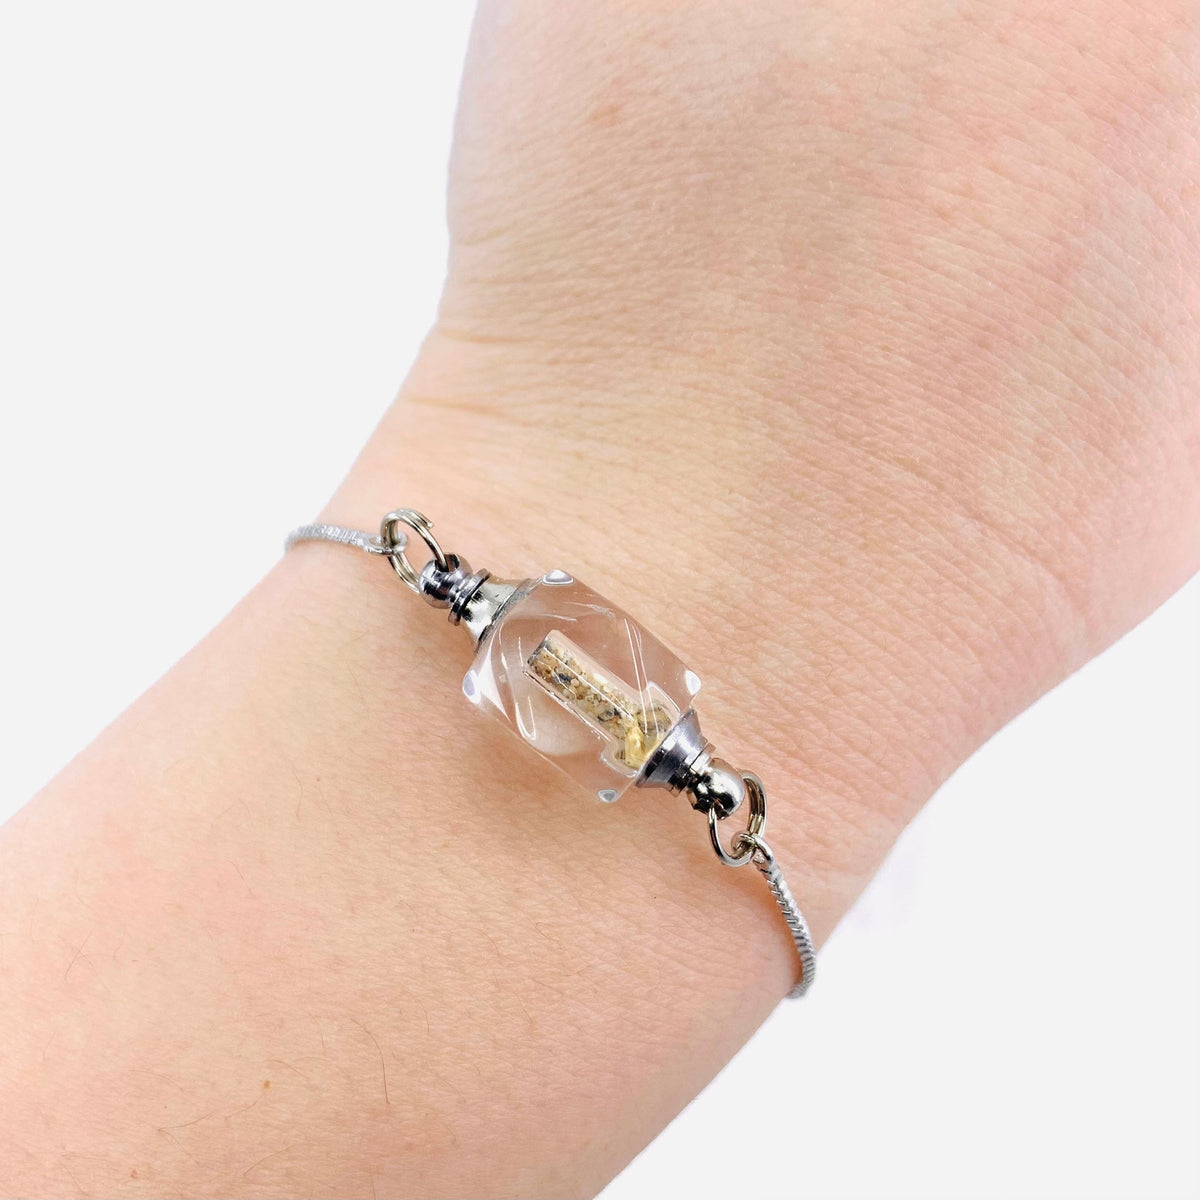 Silver Sand Capsule Keepsake Bracelet Jewelry - 